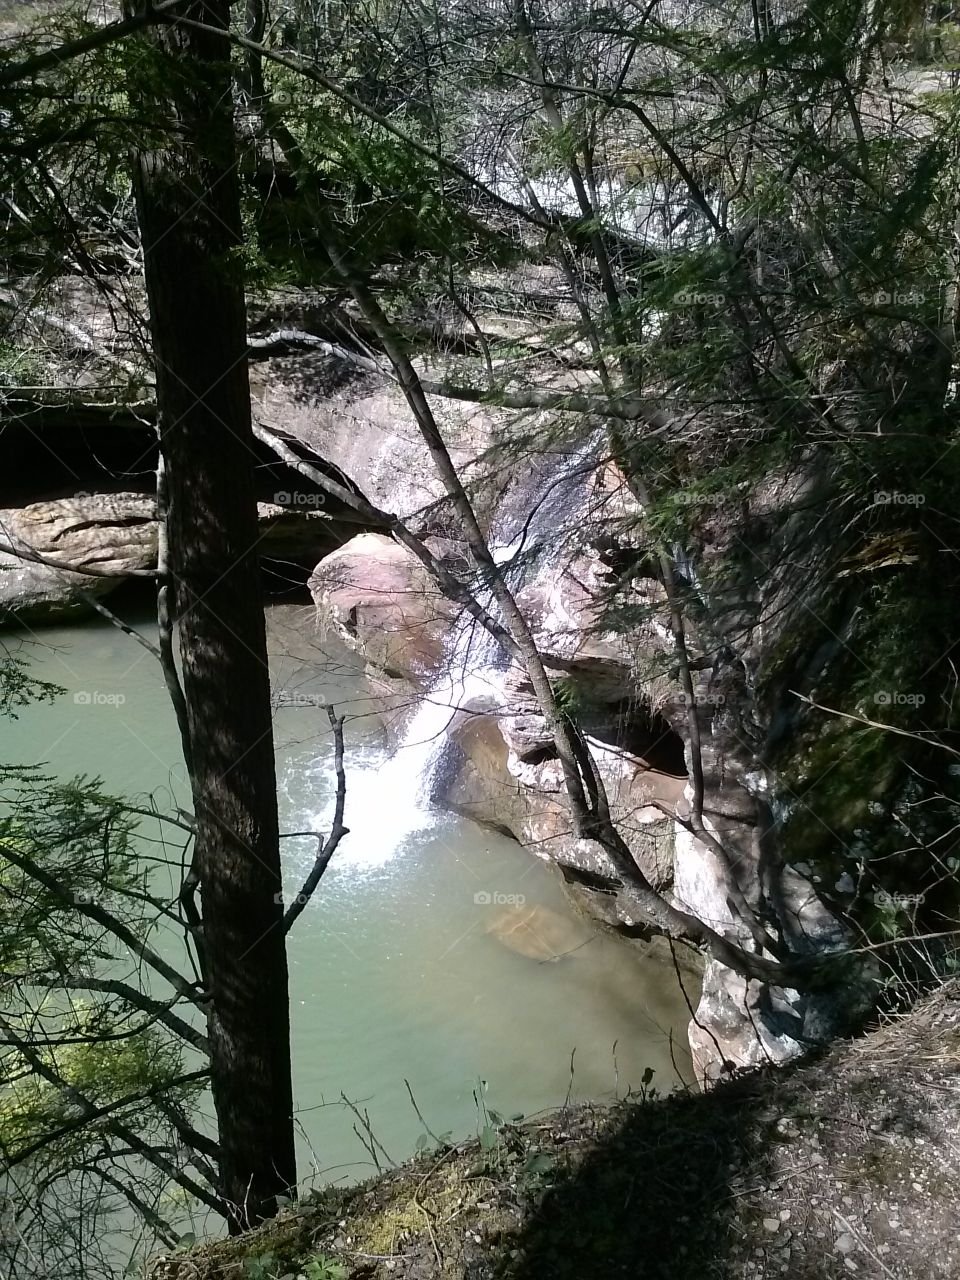 The falls at Hocking Hills